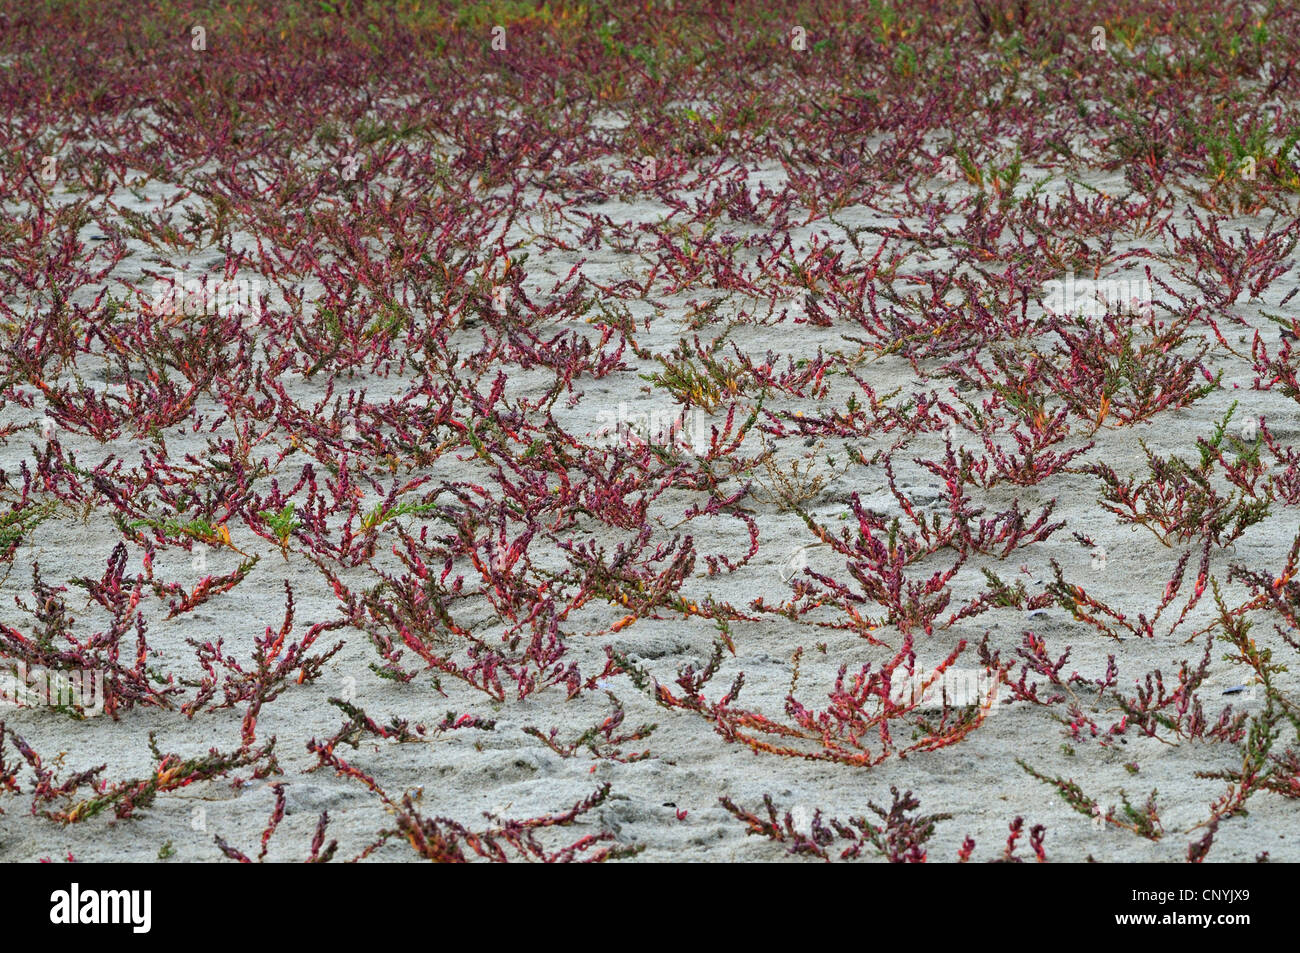 Annual seablite, Annual sea-blite, Herbaceous sea-blite (Suaeda maritima), on the beach, Netherlands Stock Photo